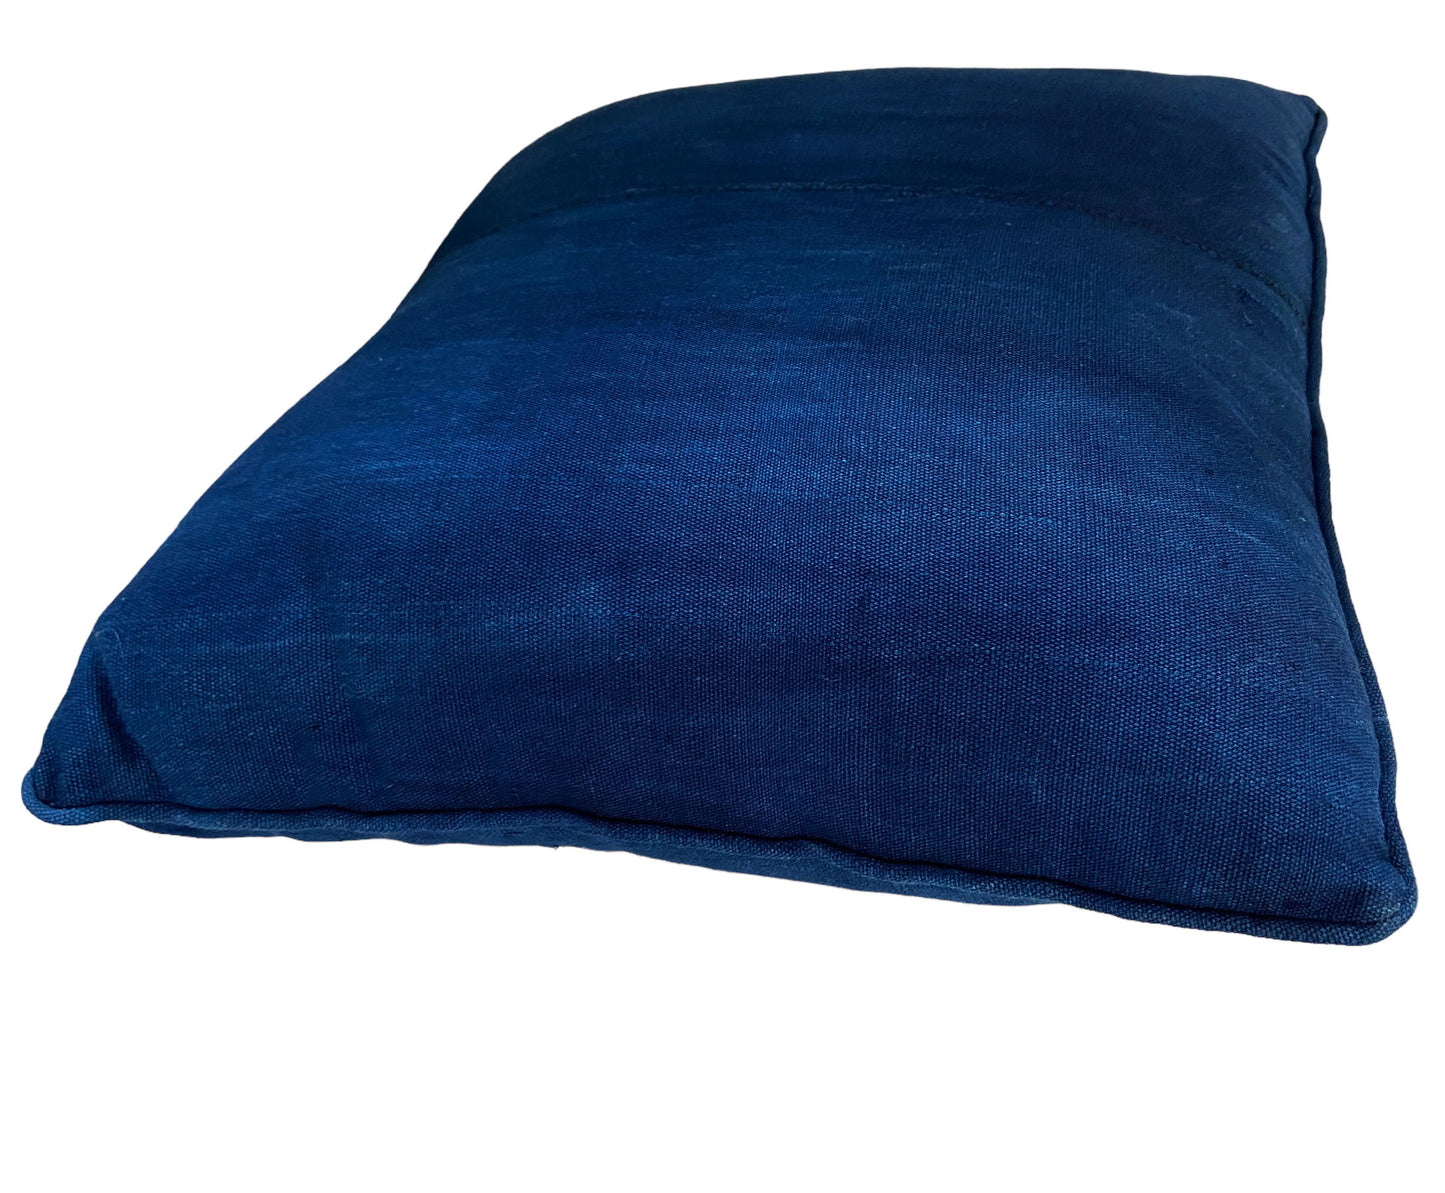 #5498  African Custom Made Solid Indigo  cloth Pillow 17"